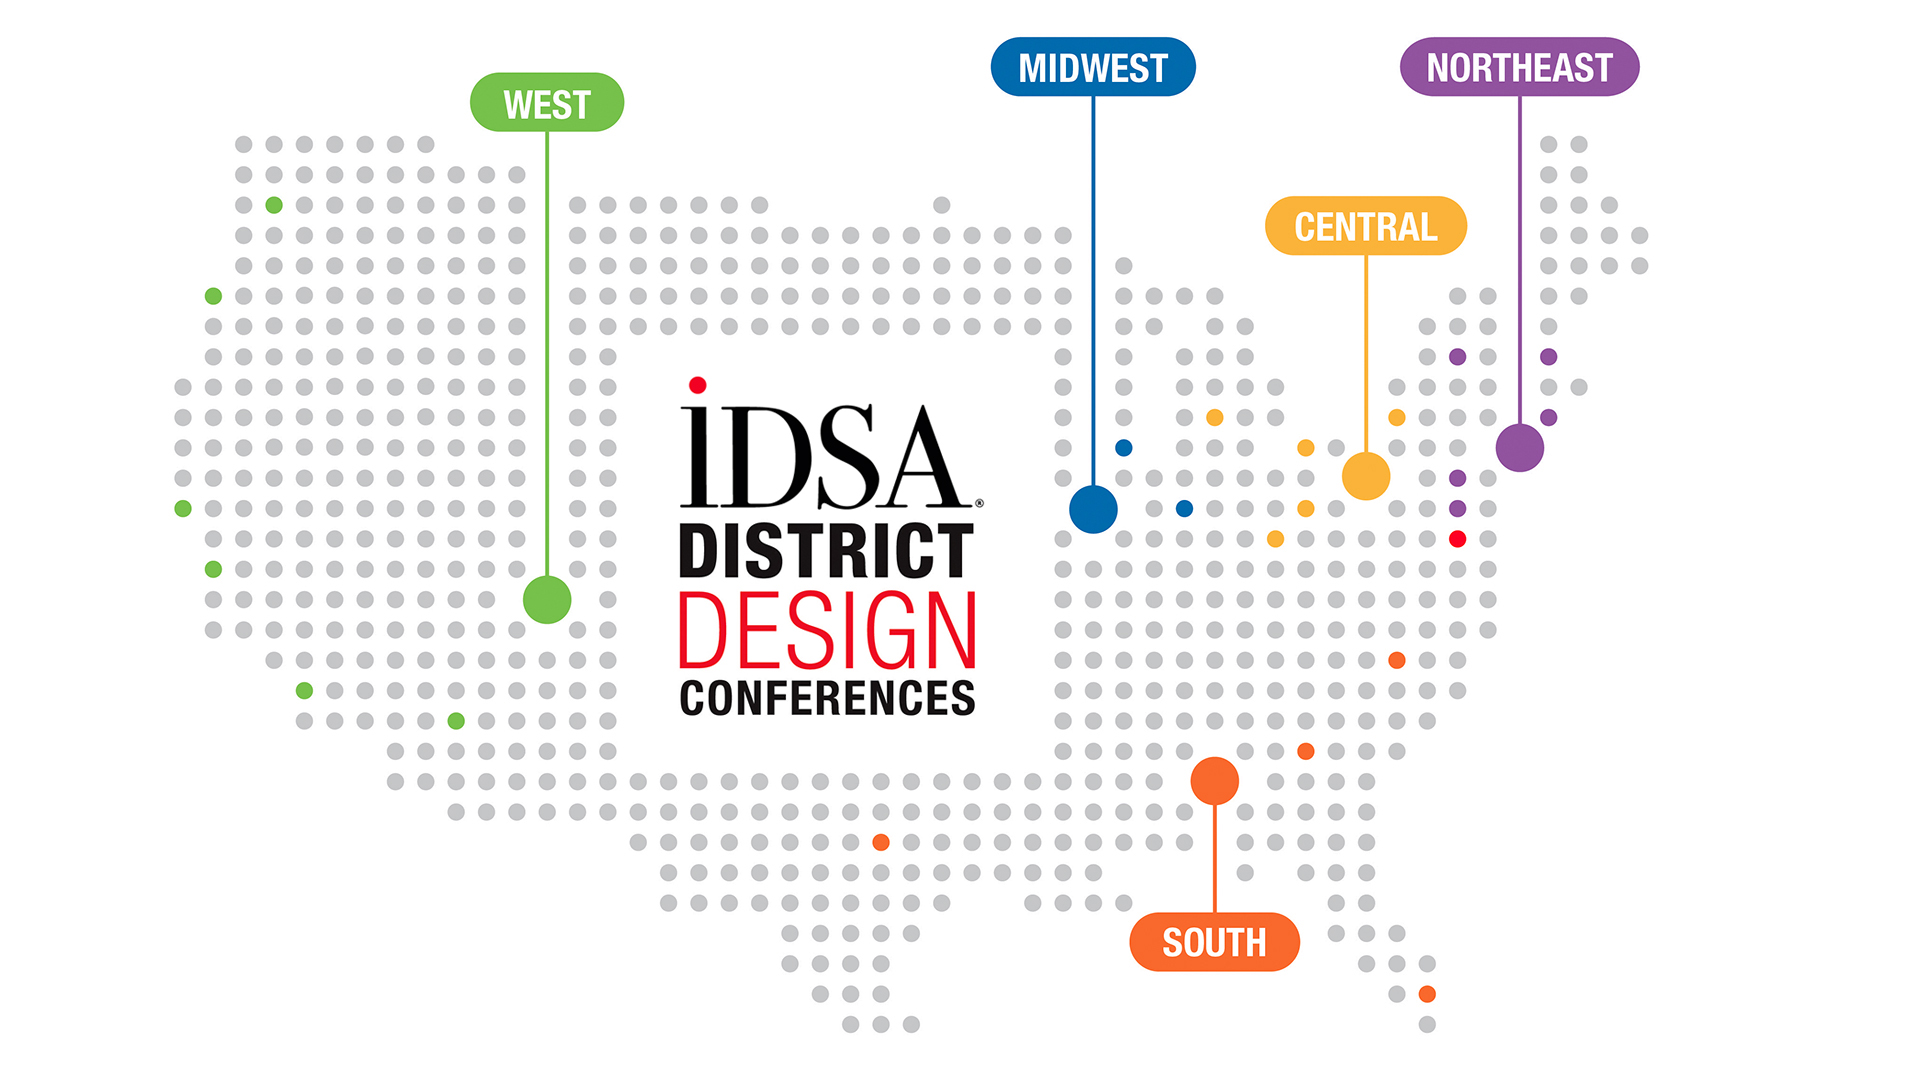 IDSA District Design Conferences 2017